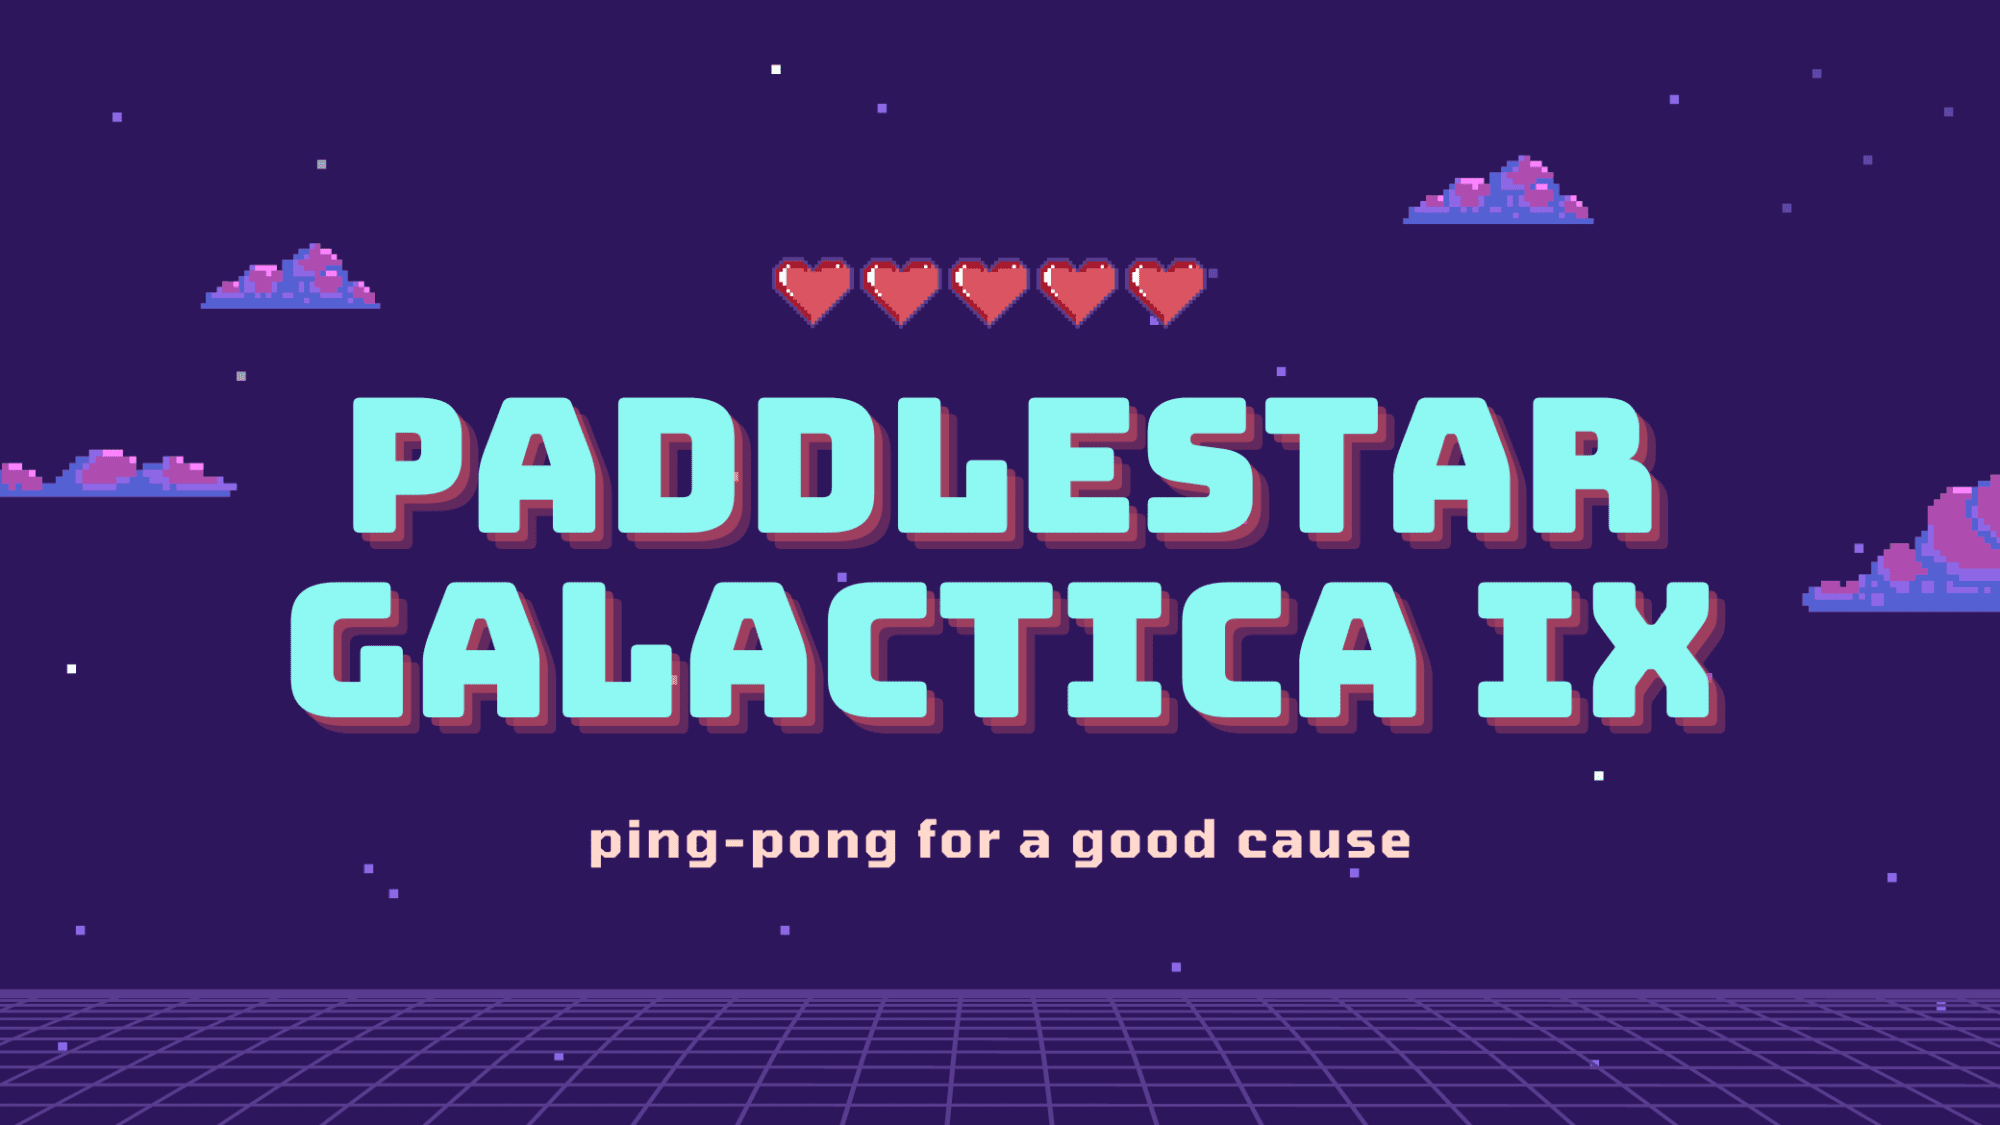 Paddlestar Galactica IX, ping-pong for a good cause